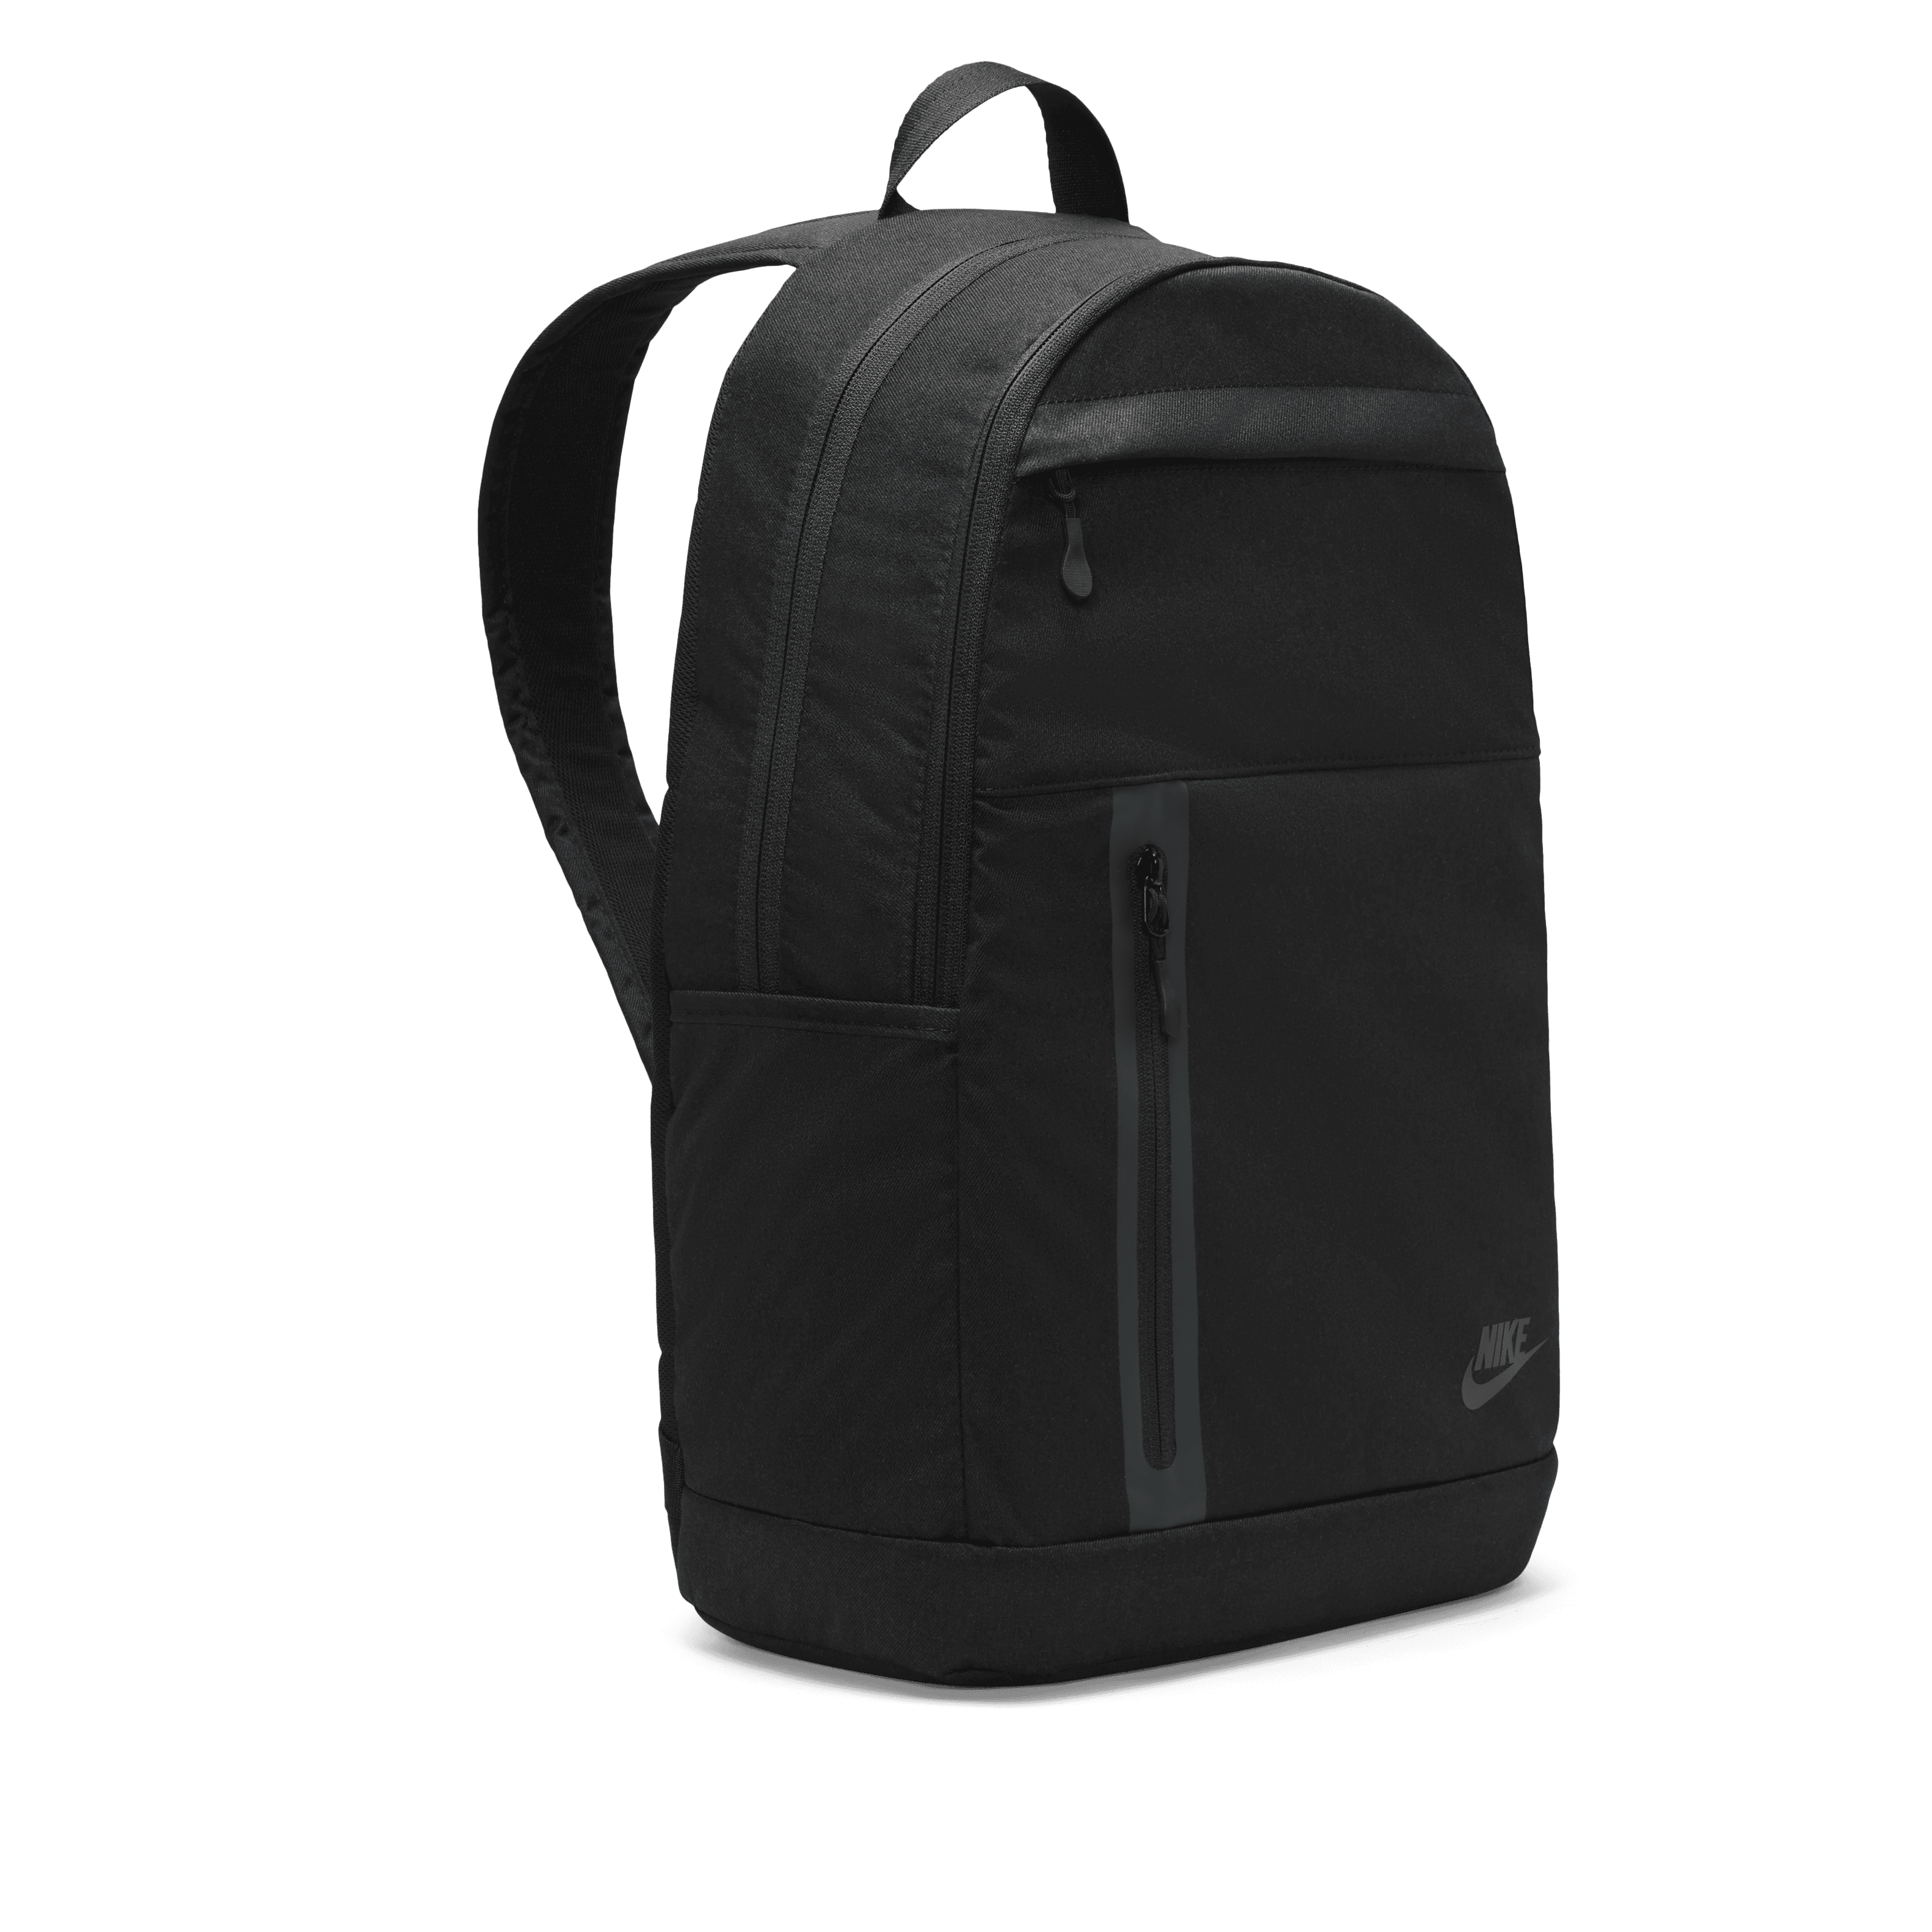 Nike Elemental Premium Backpack-Black